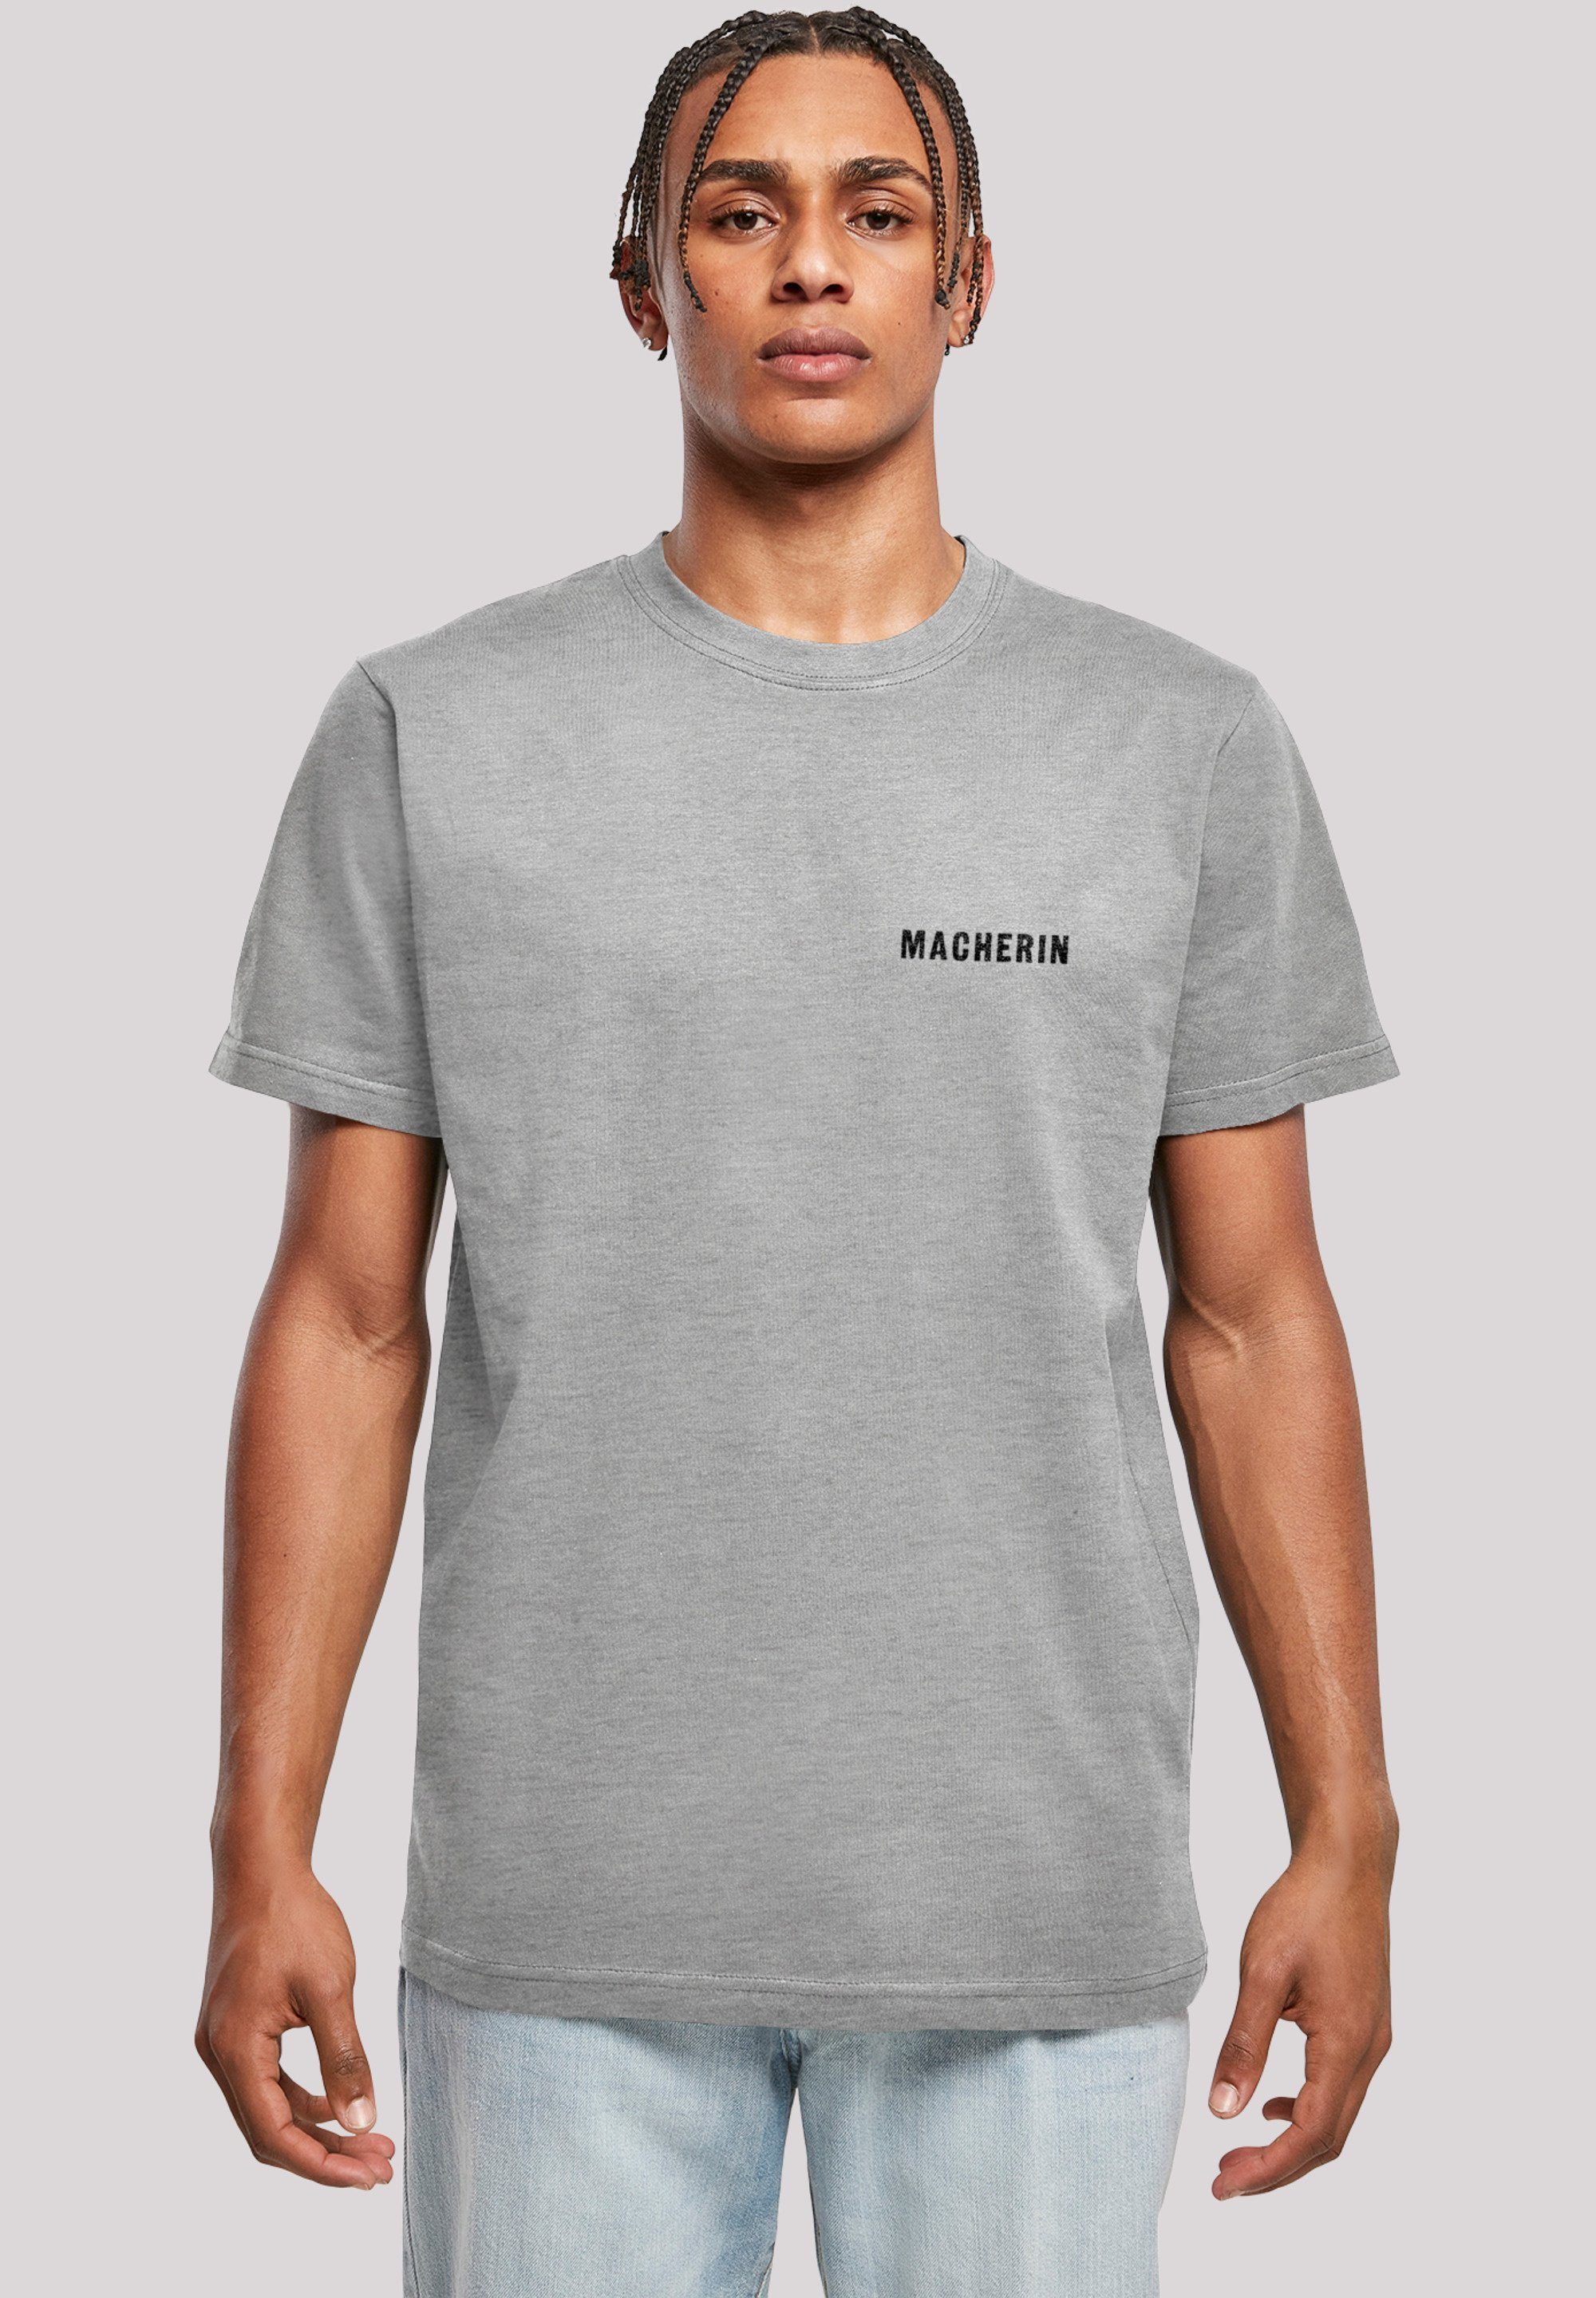 Jugendwort Macherin 2022, F4NT4STIC heather grey slang T-Shirt